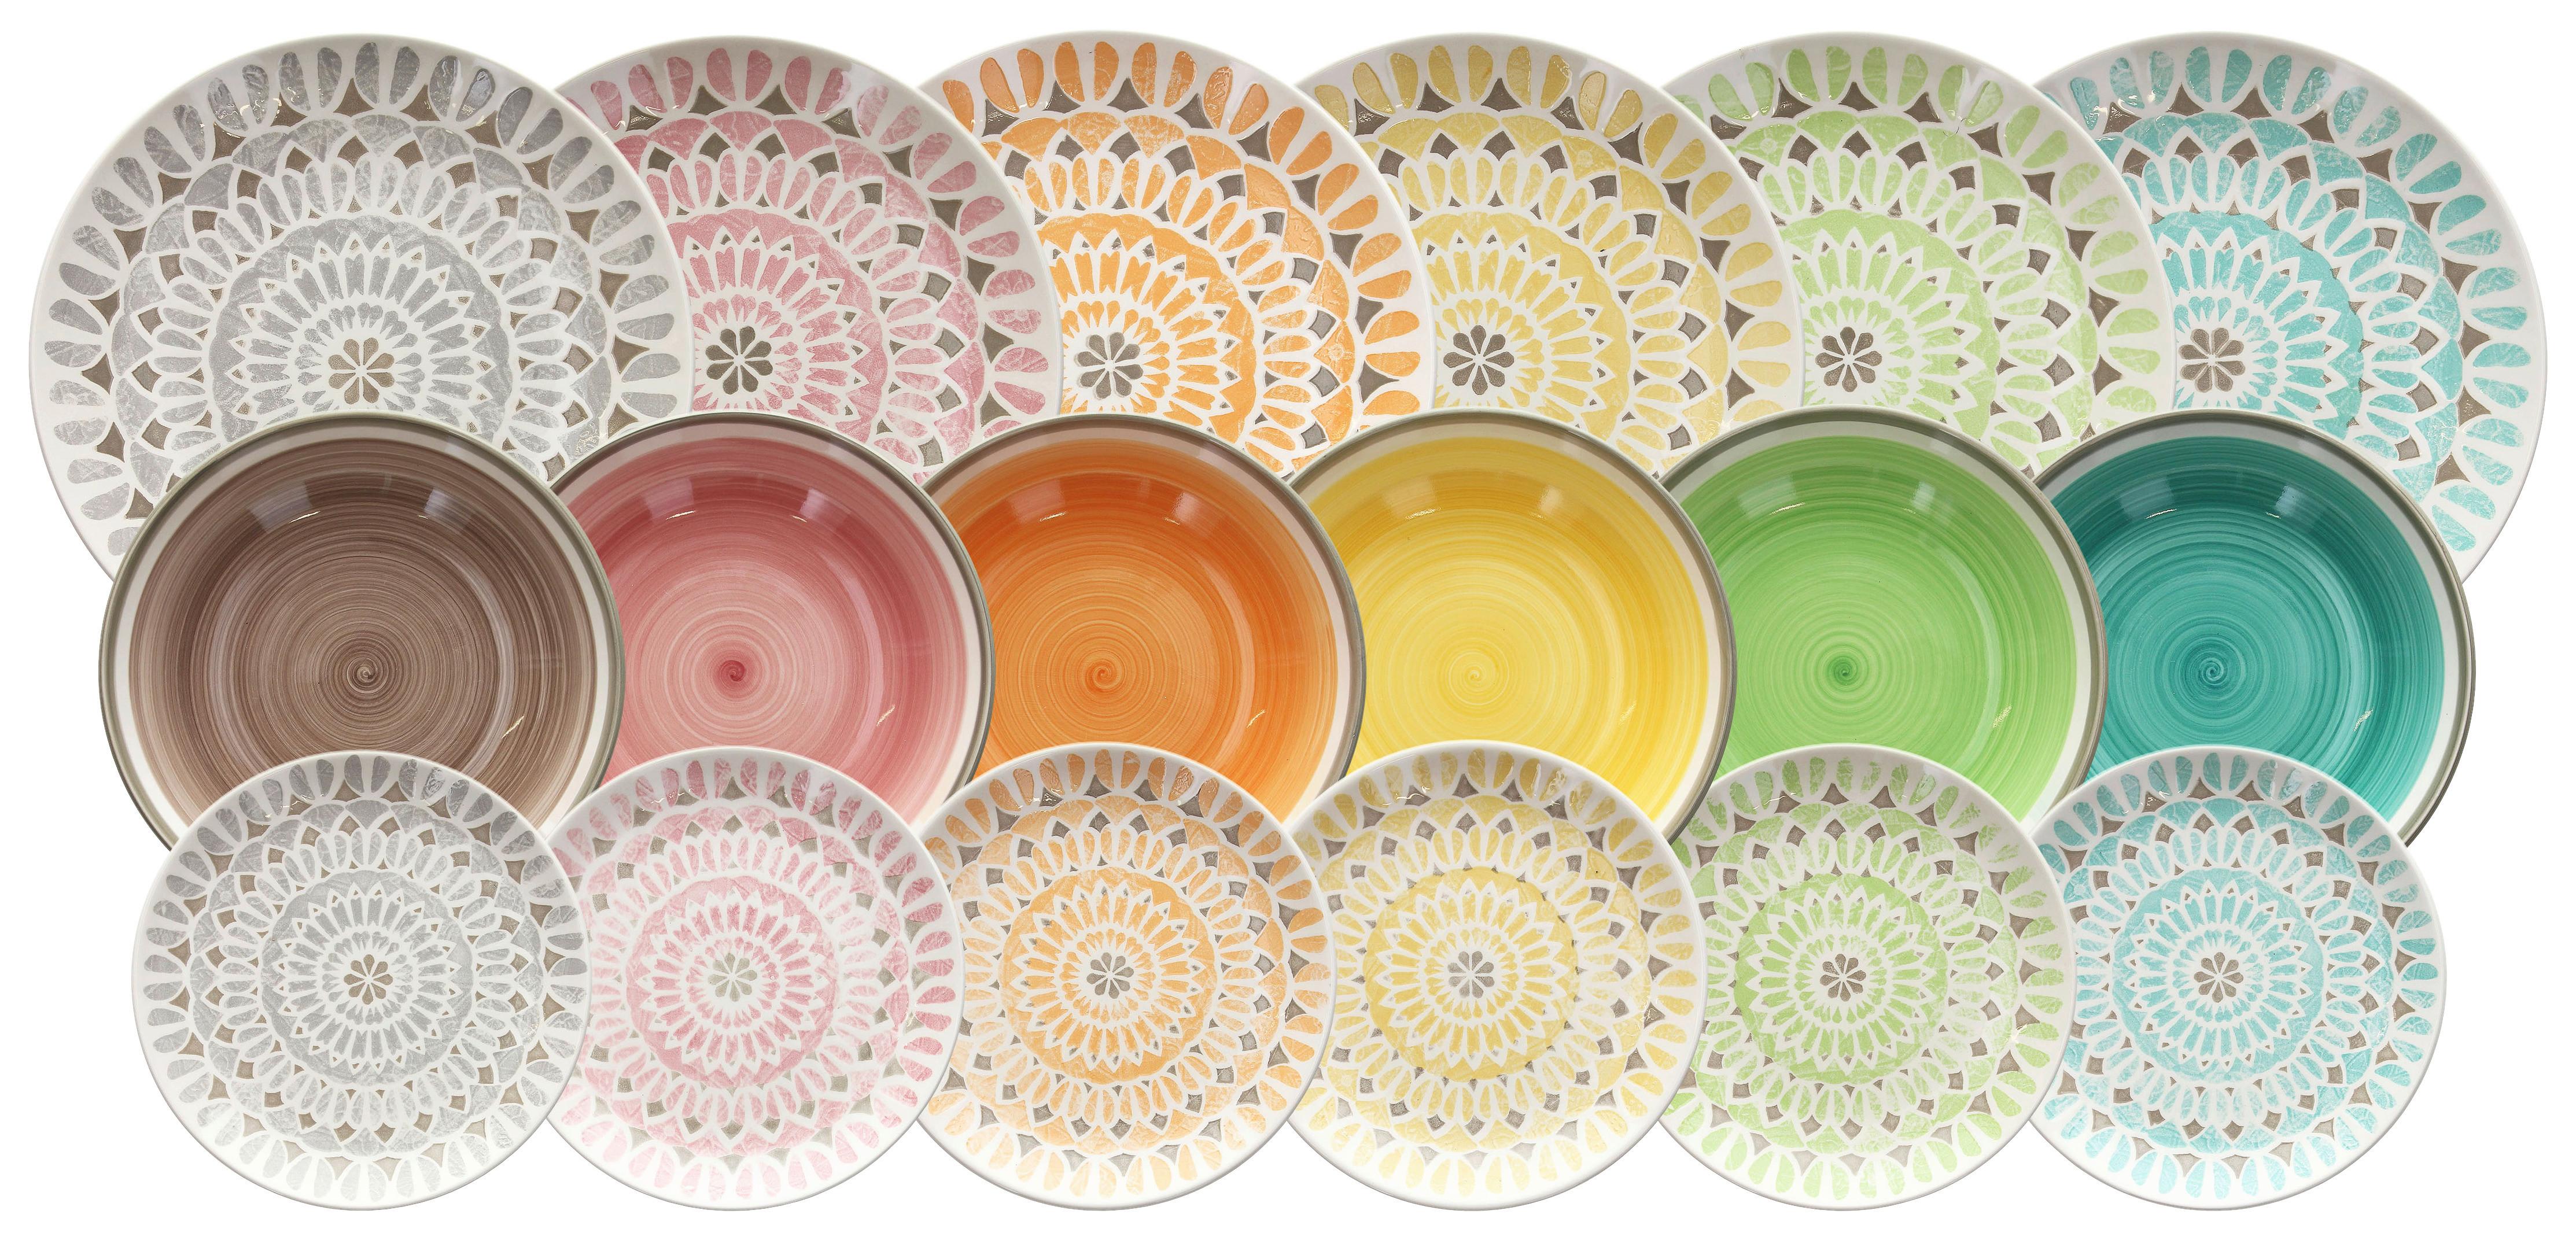 Tafelservice Kapstadt - Multicolor, KONVENTIONELL, Keramik (36/22/28cm) - Tognana